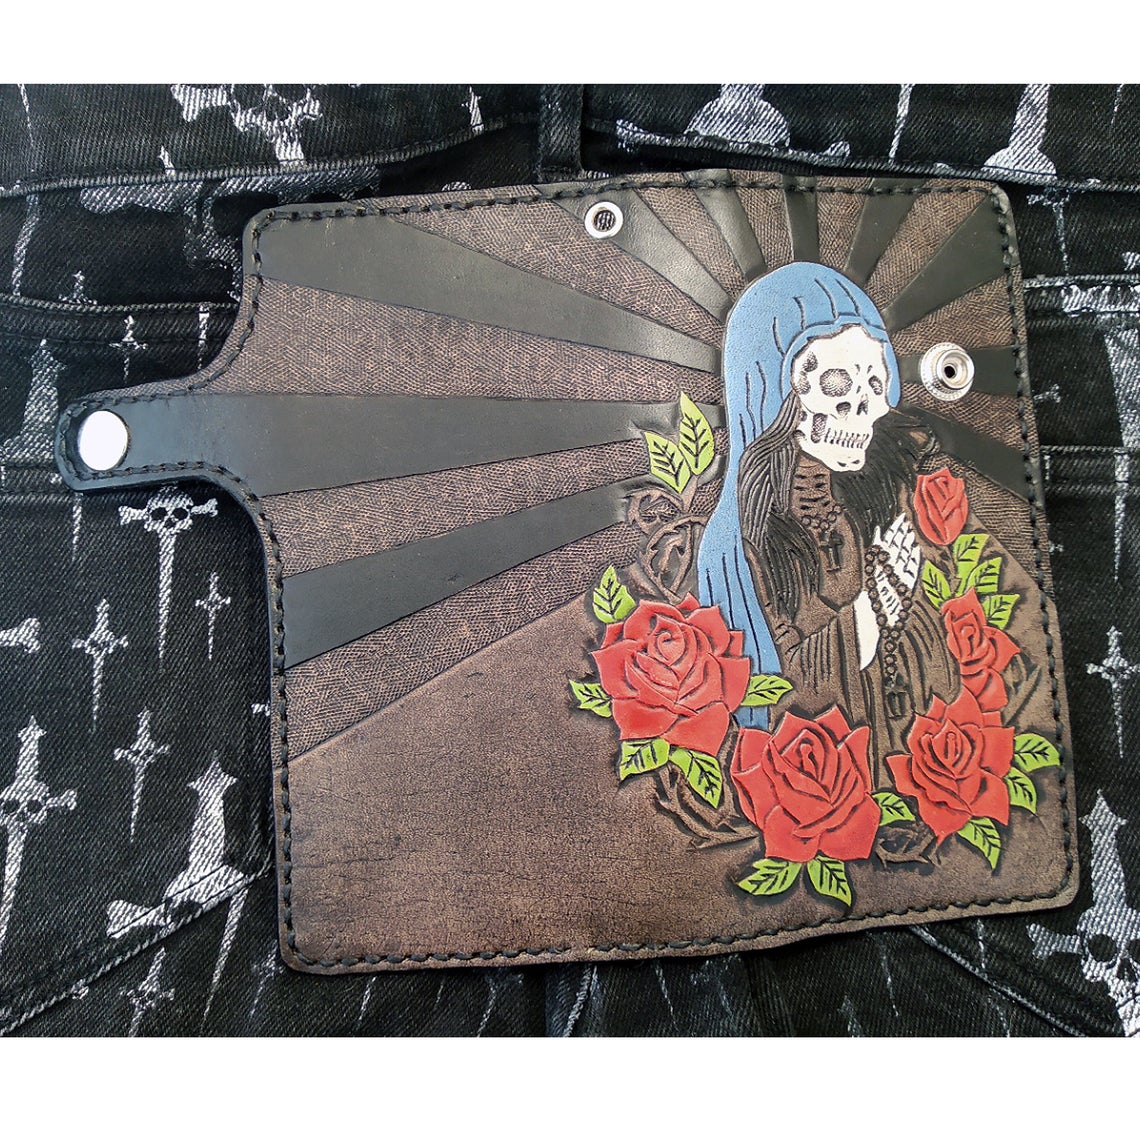 Santa Muerte biker-style wallet